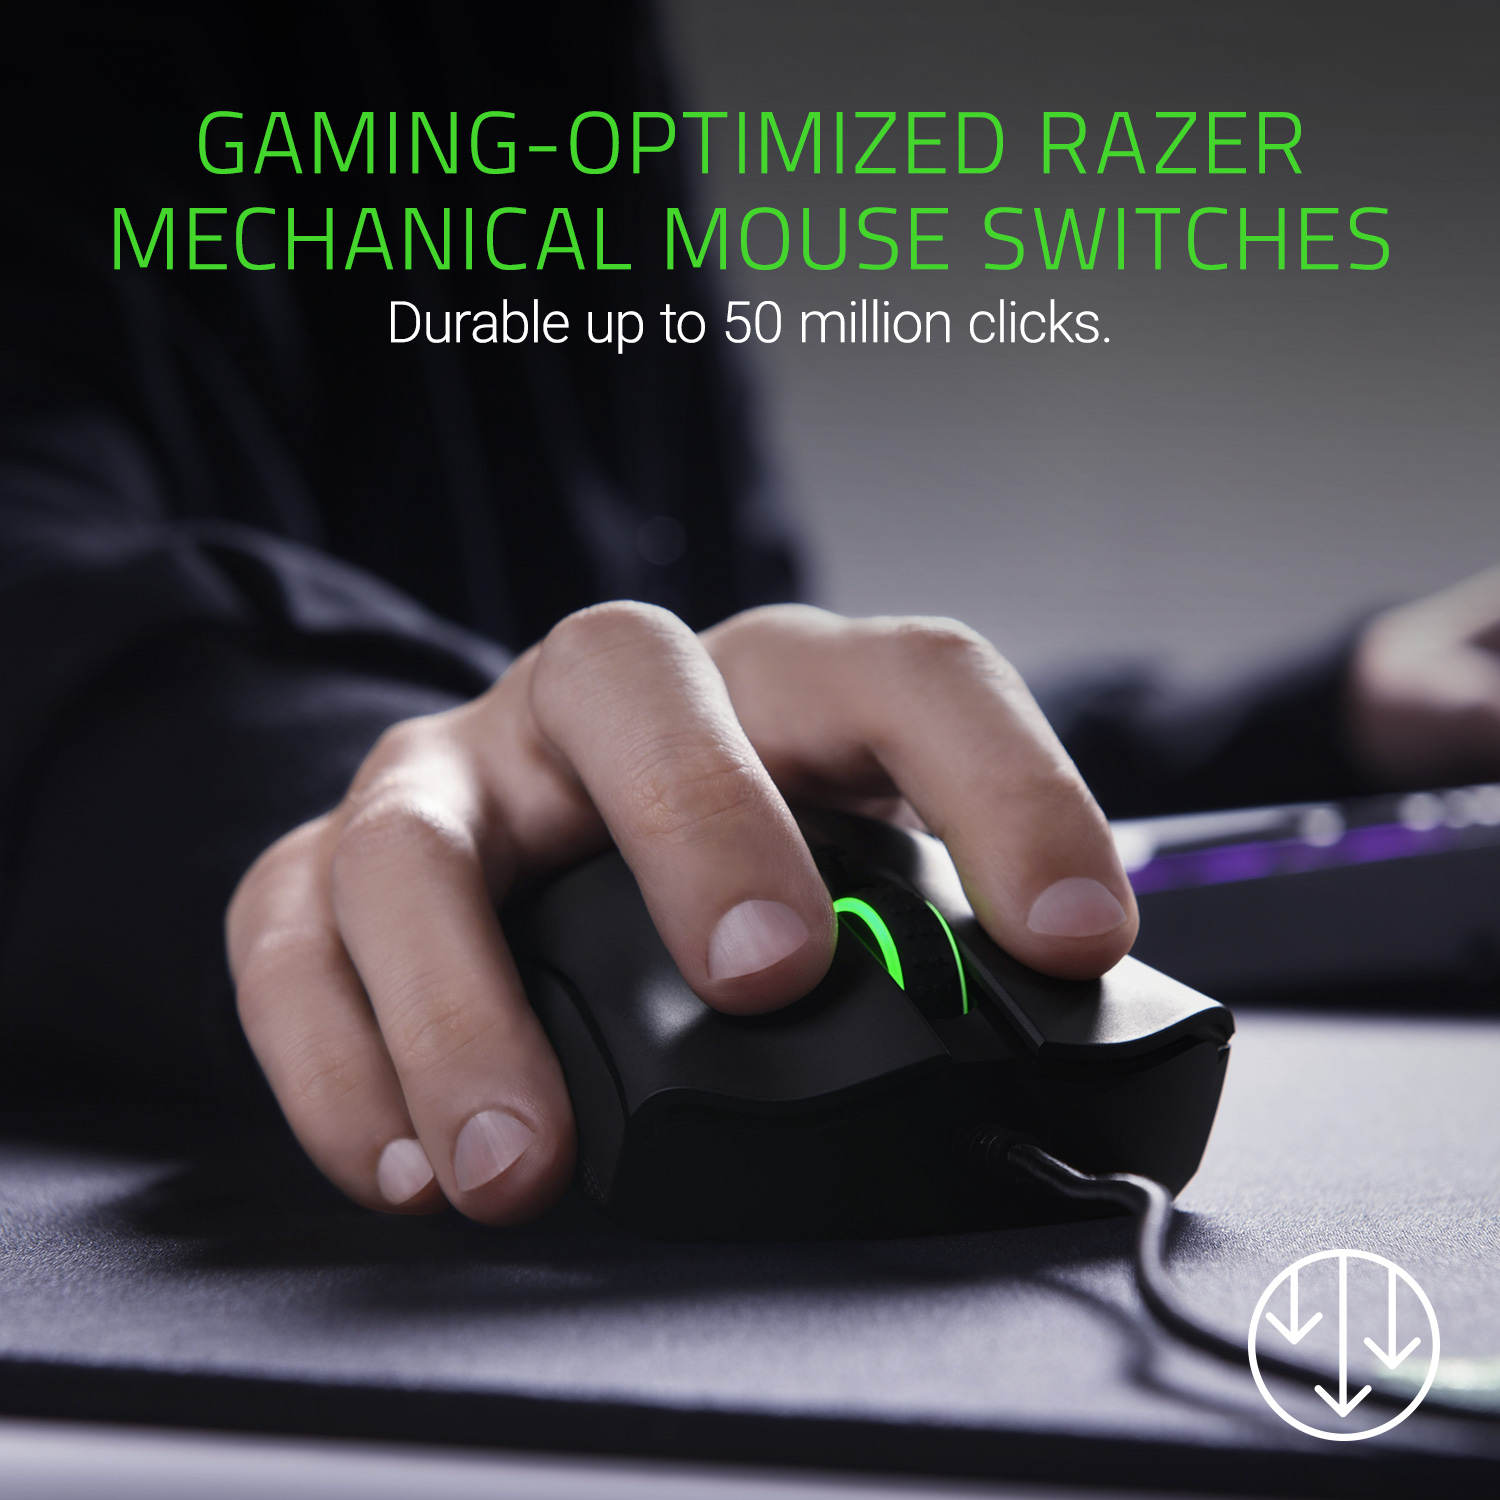 Razer DeathAdder Elite: True 16,000 5G Optical Sensor - Razer Mechanical Mouse Switches (Up to 50 Million Clicks) - Ergonomic Form Factor - Esports Gaming Mouse - image 3 of 7